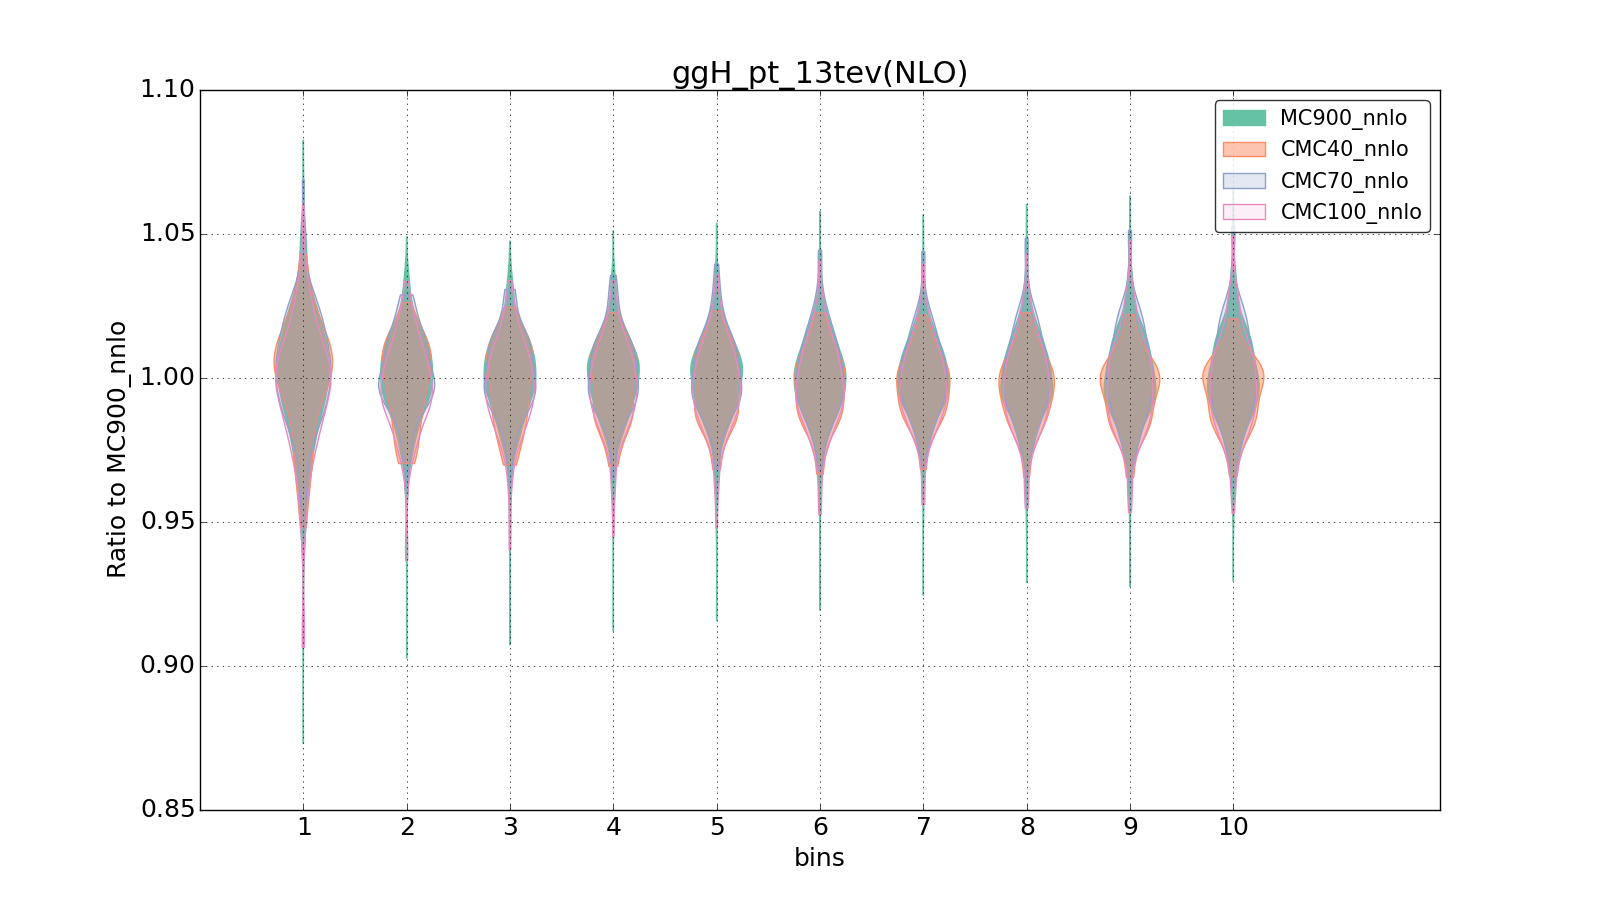 figure plots/CMCpheno/group_0_violinplot_ggH_pt_13tev(NLO).png